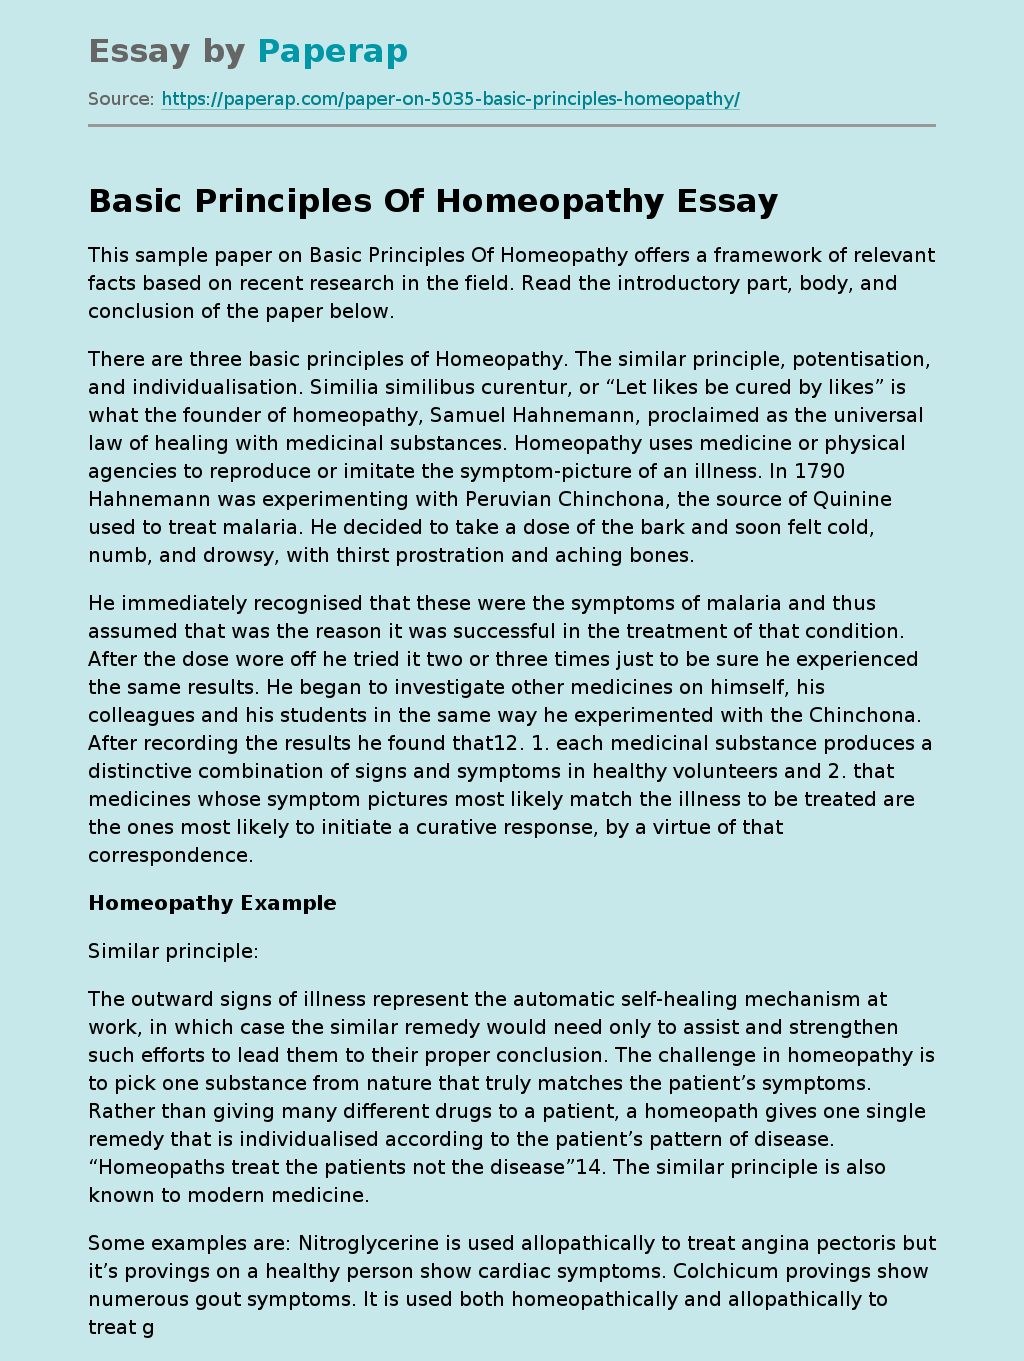 Basic Principles Of Homeopathy